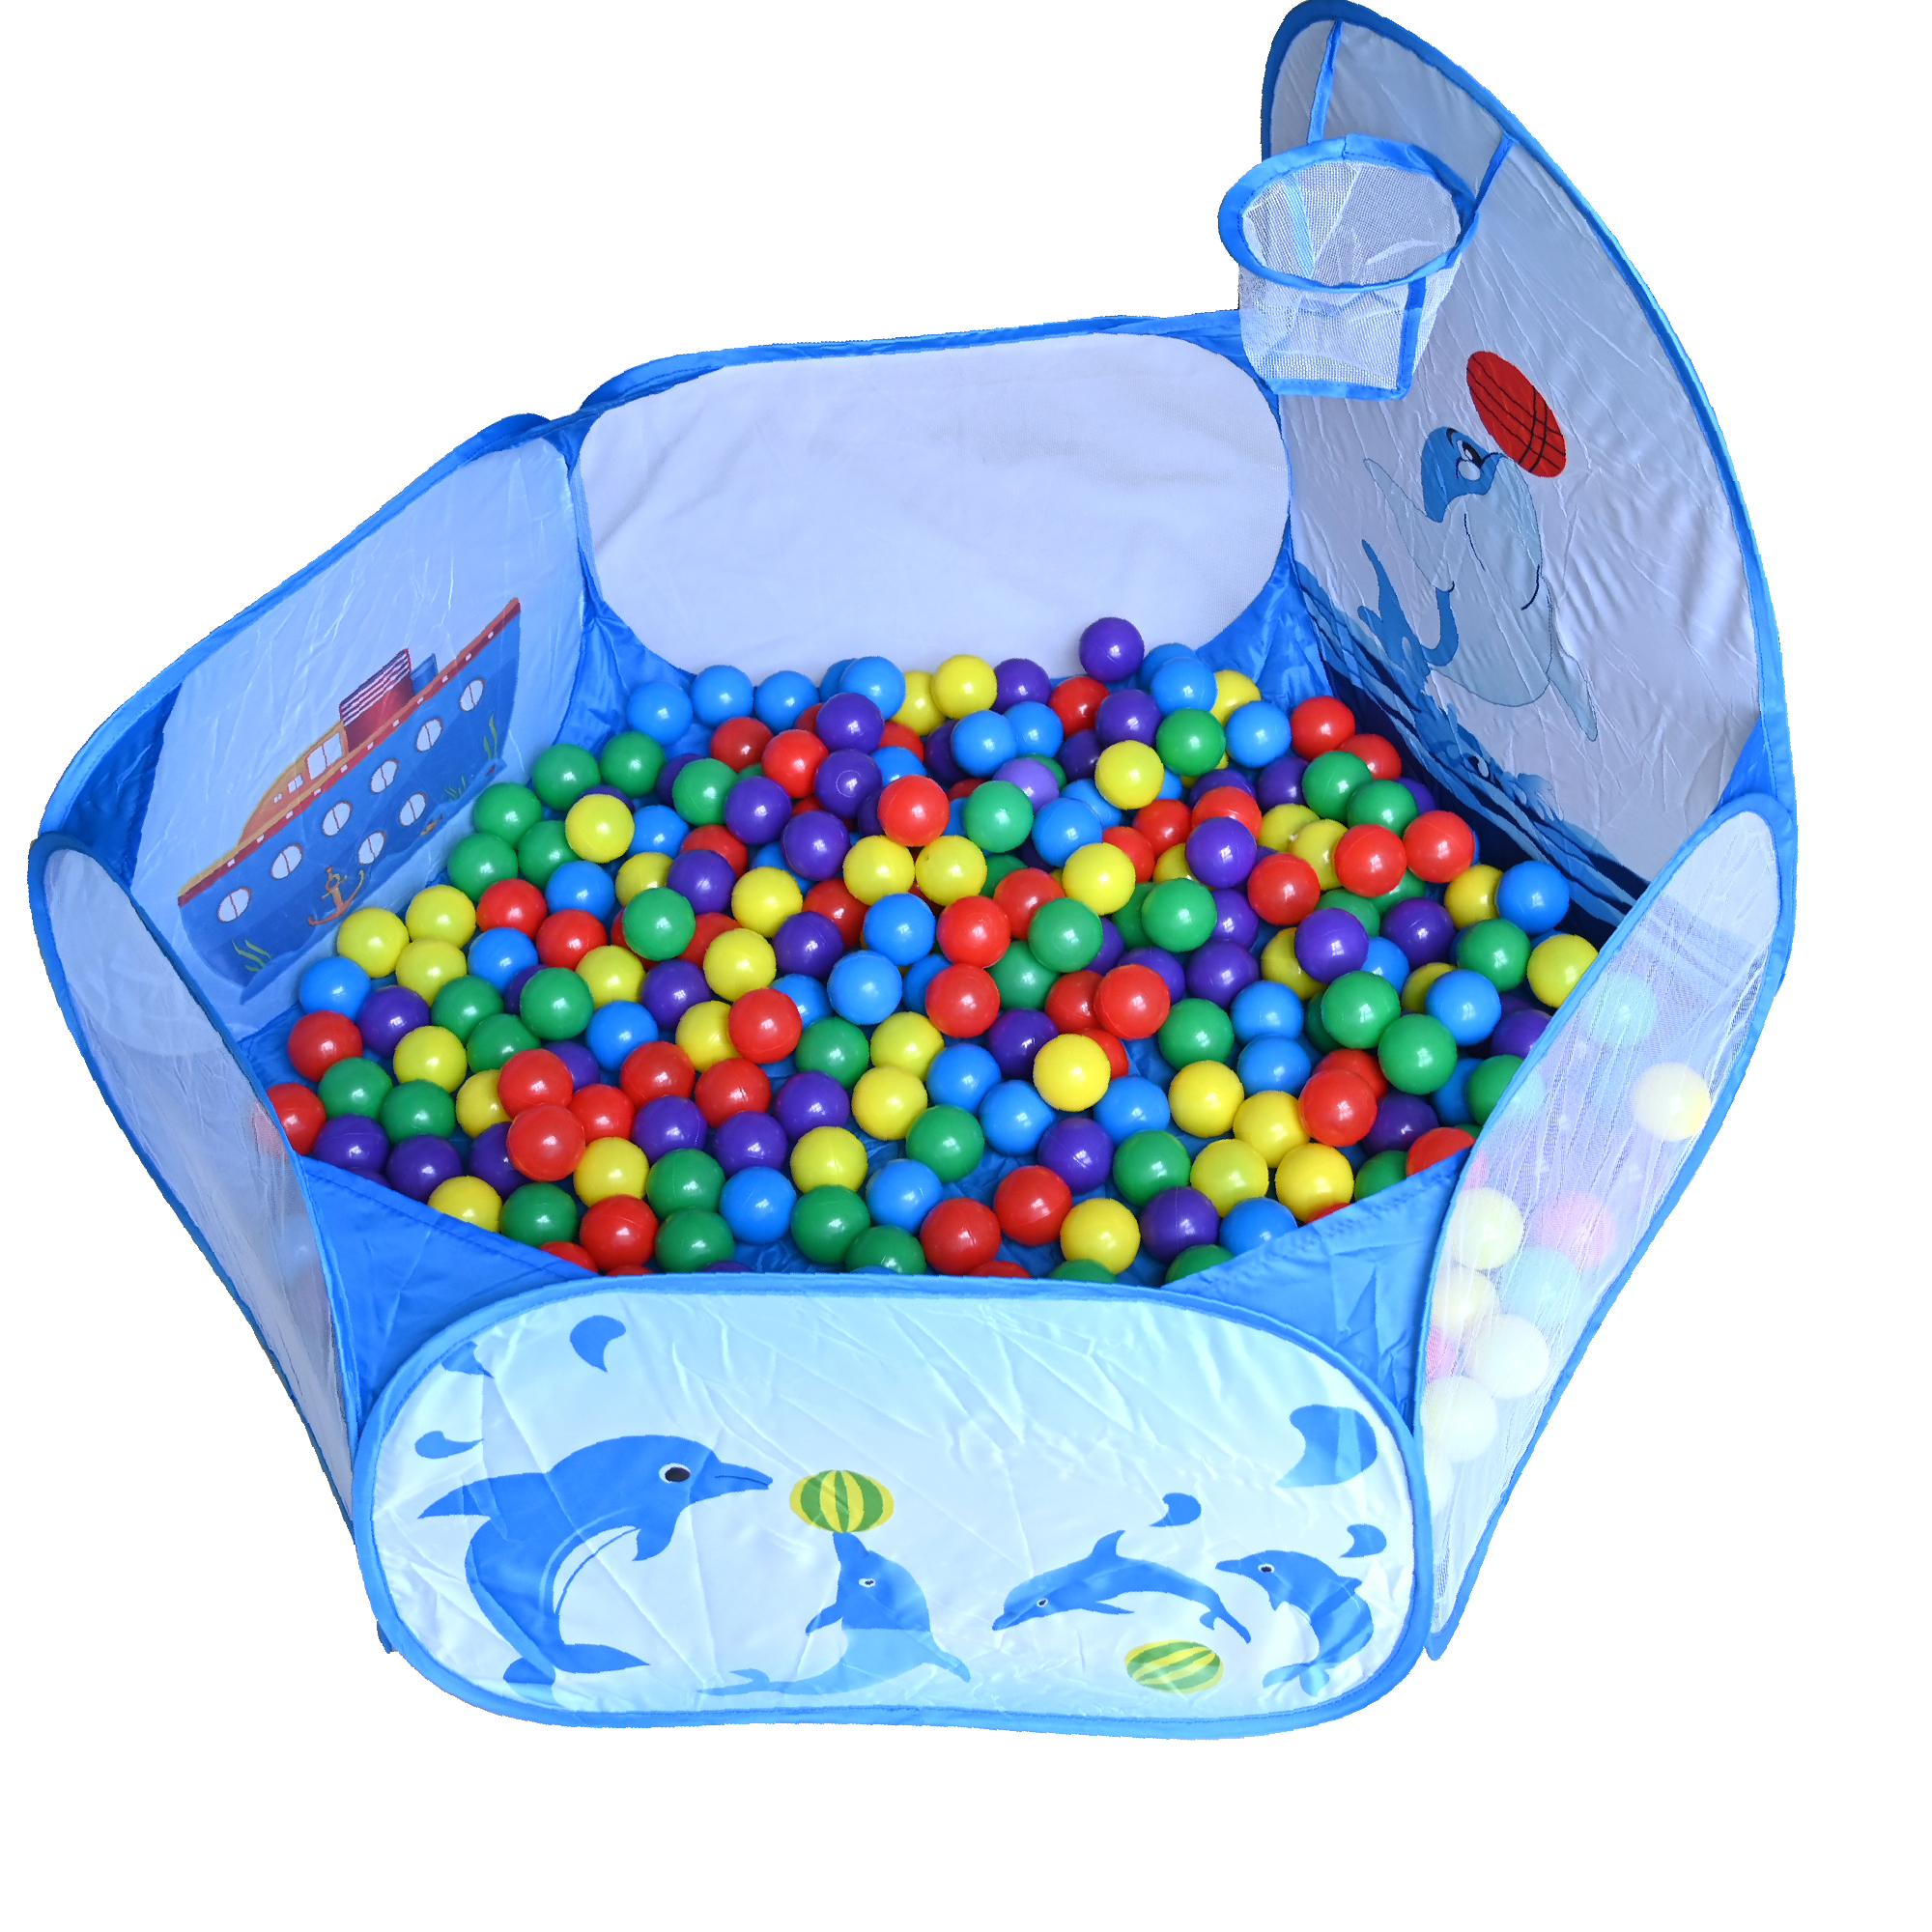 150 200 600 Stk Hersteller Bälle Spielbälle für Bällebad Ball Poll Pit 100 